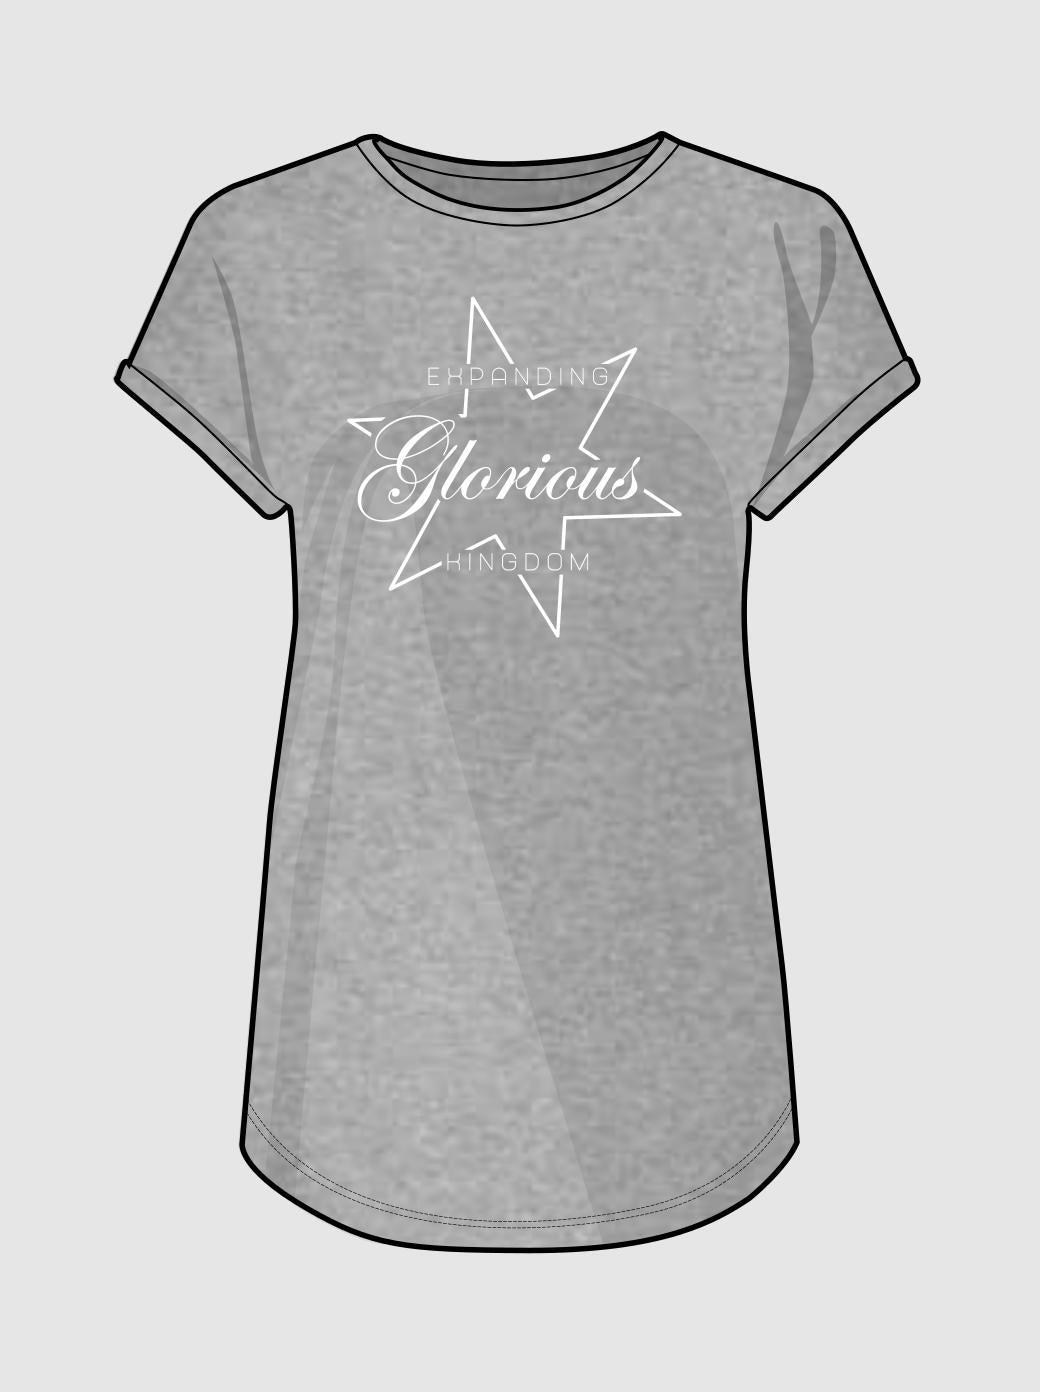 Frauen T-Shirt - Expanding Glorious Kingdom